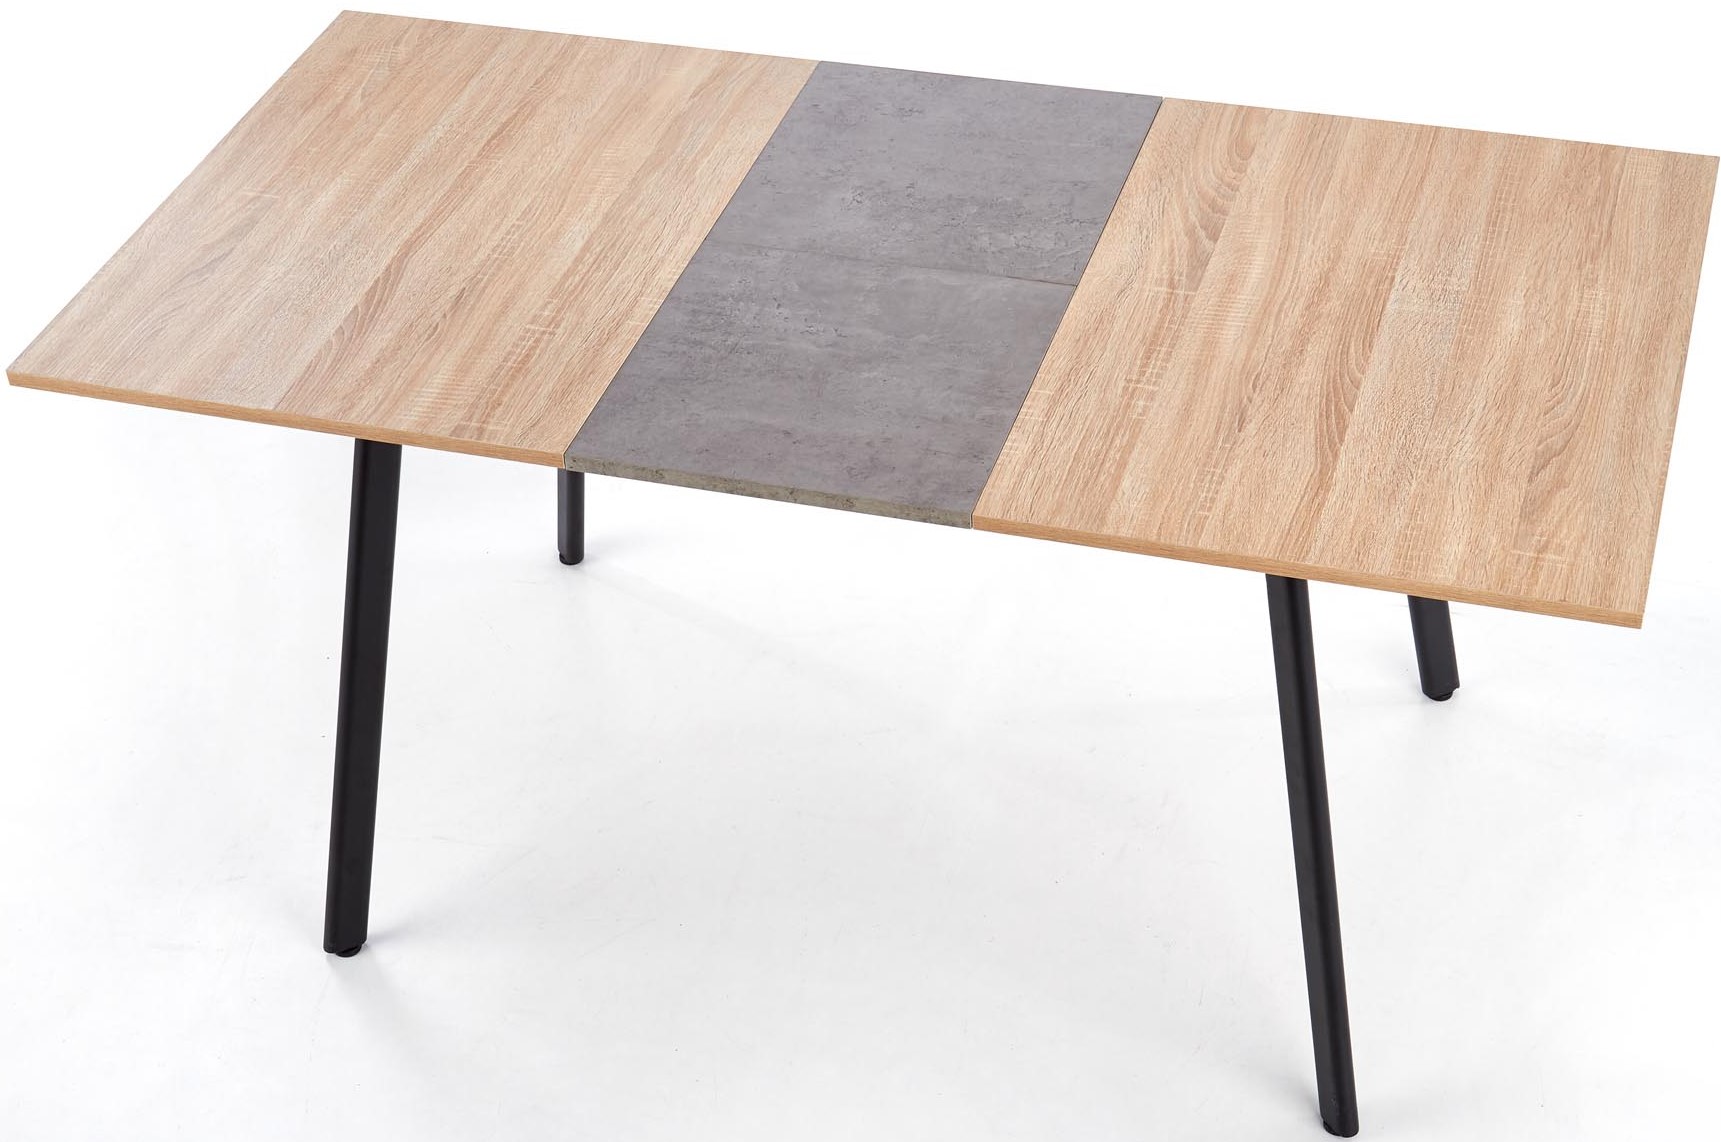 Jídelní rozkládací stůl ALBON dub sonoma / šedá 120-160x80 cm